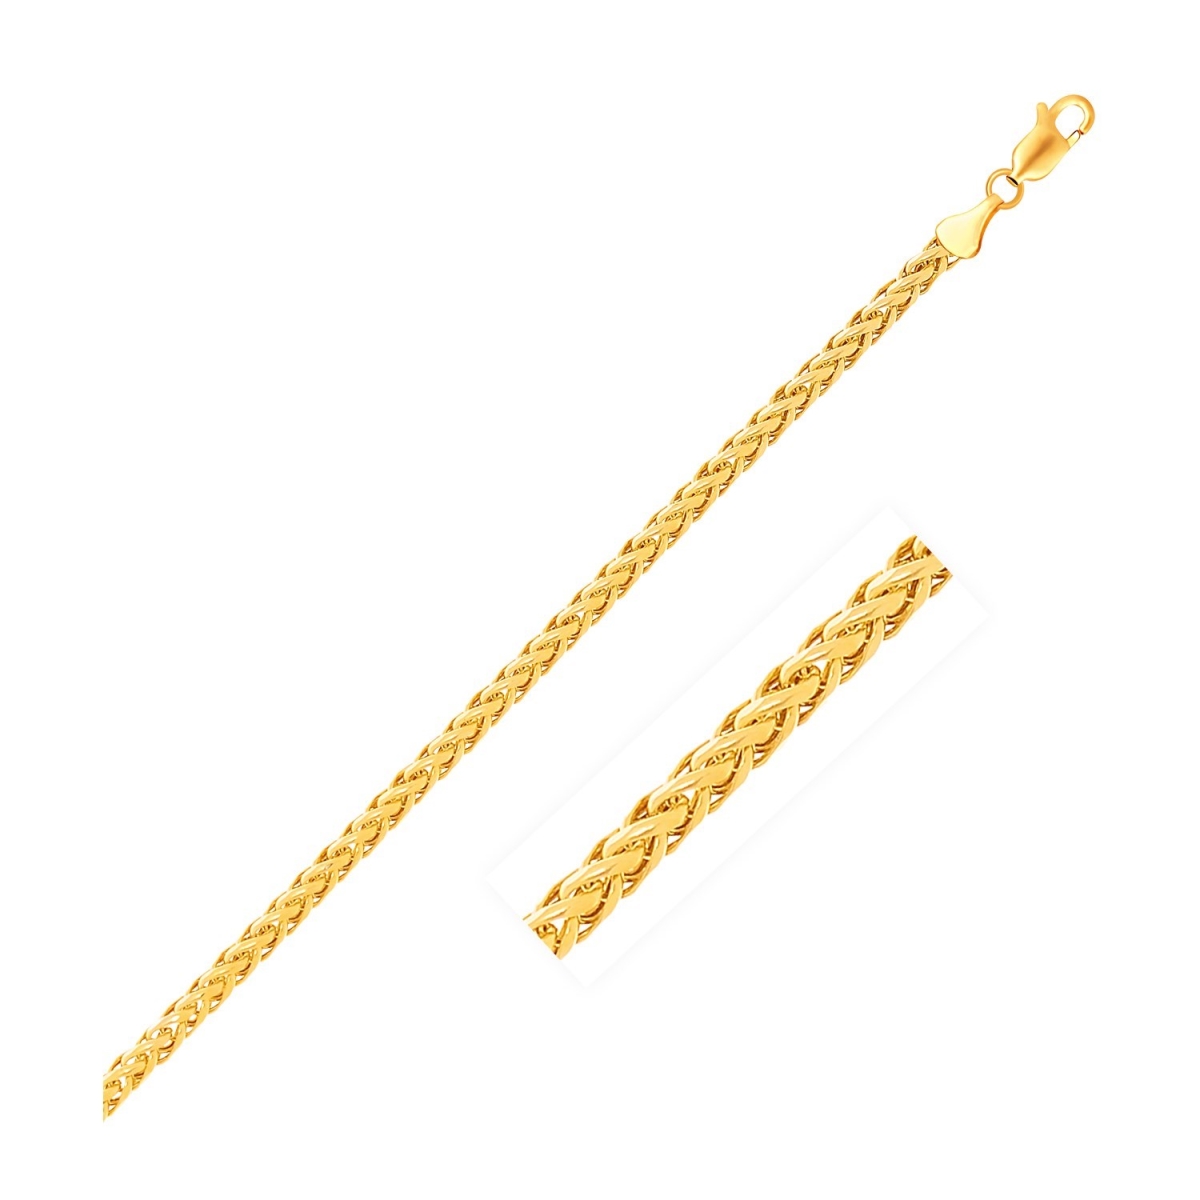 D64887933-8 4.1 Mm 14k Yellow Gold Diamond Cut Round Franco Bracelet - Size 8 In.